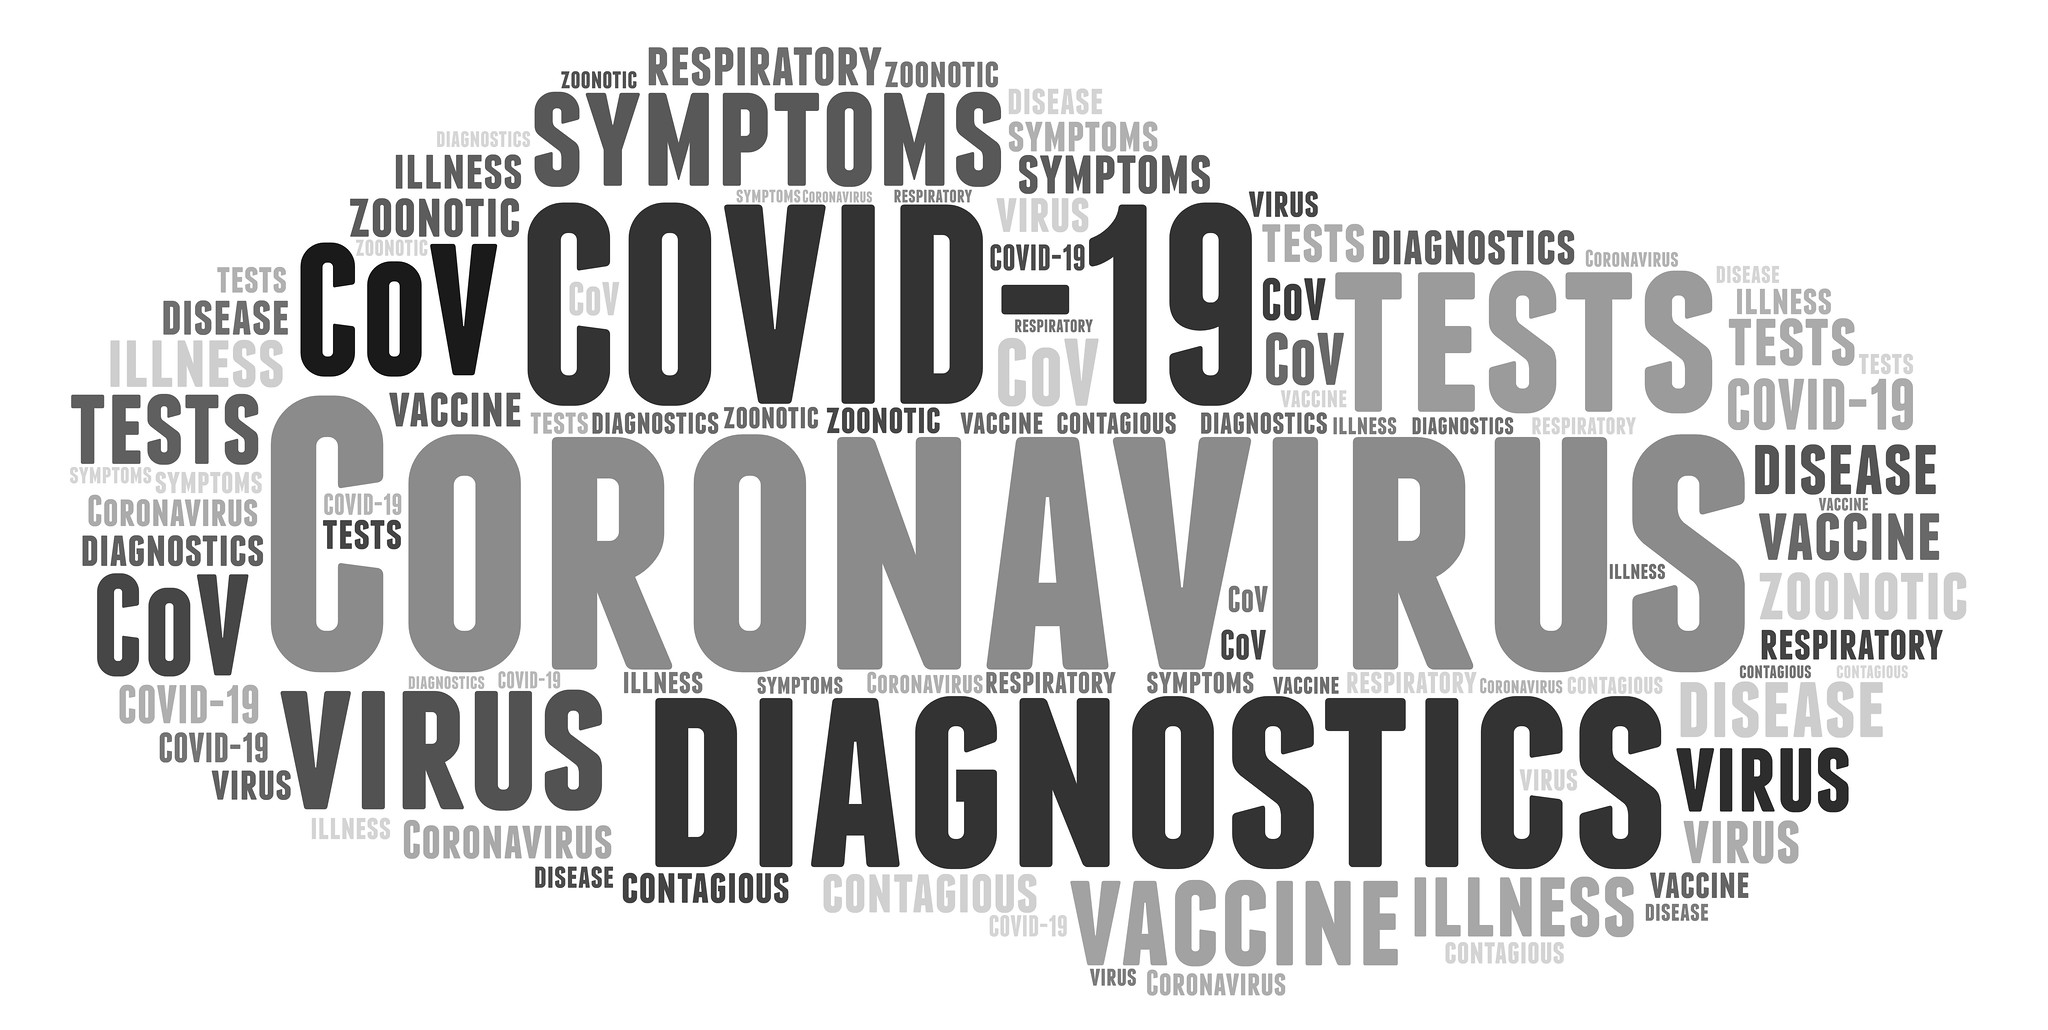 Coronavirus or COVID? A glossary to help navigate pandemic vocabulary |  Penn Today